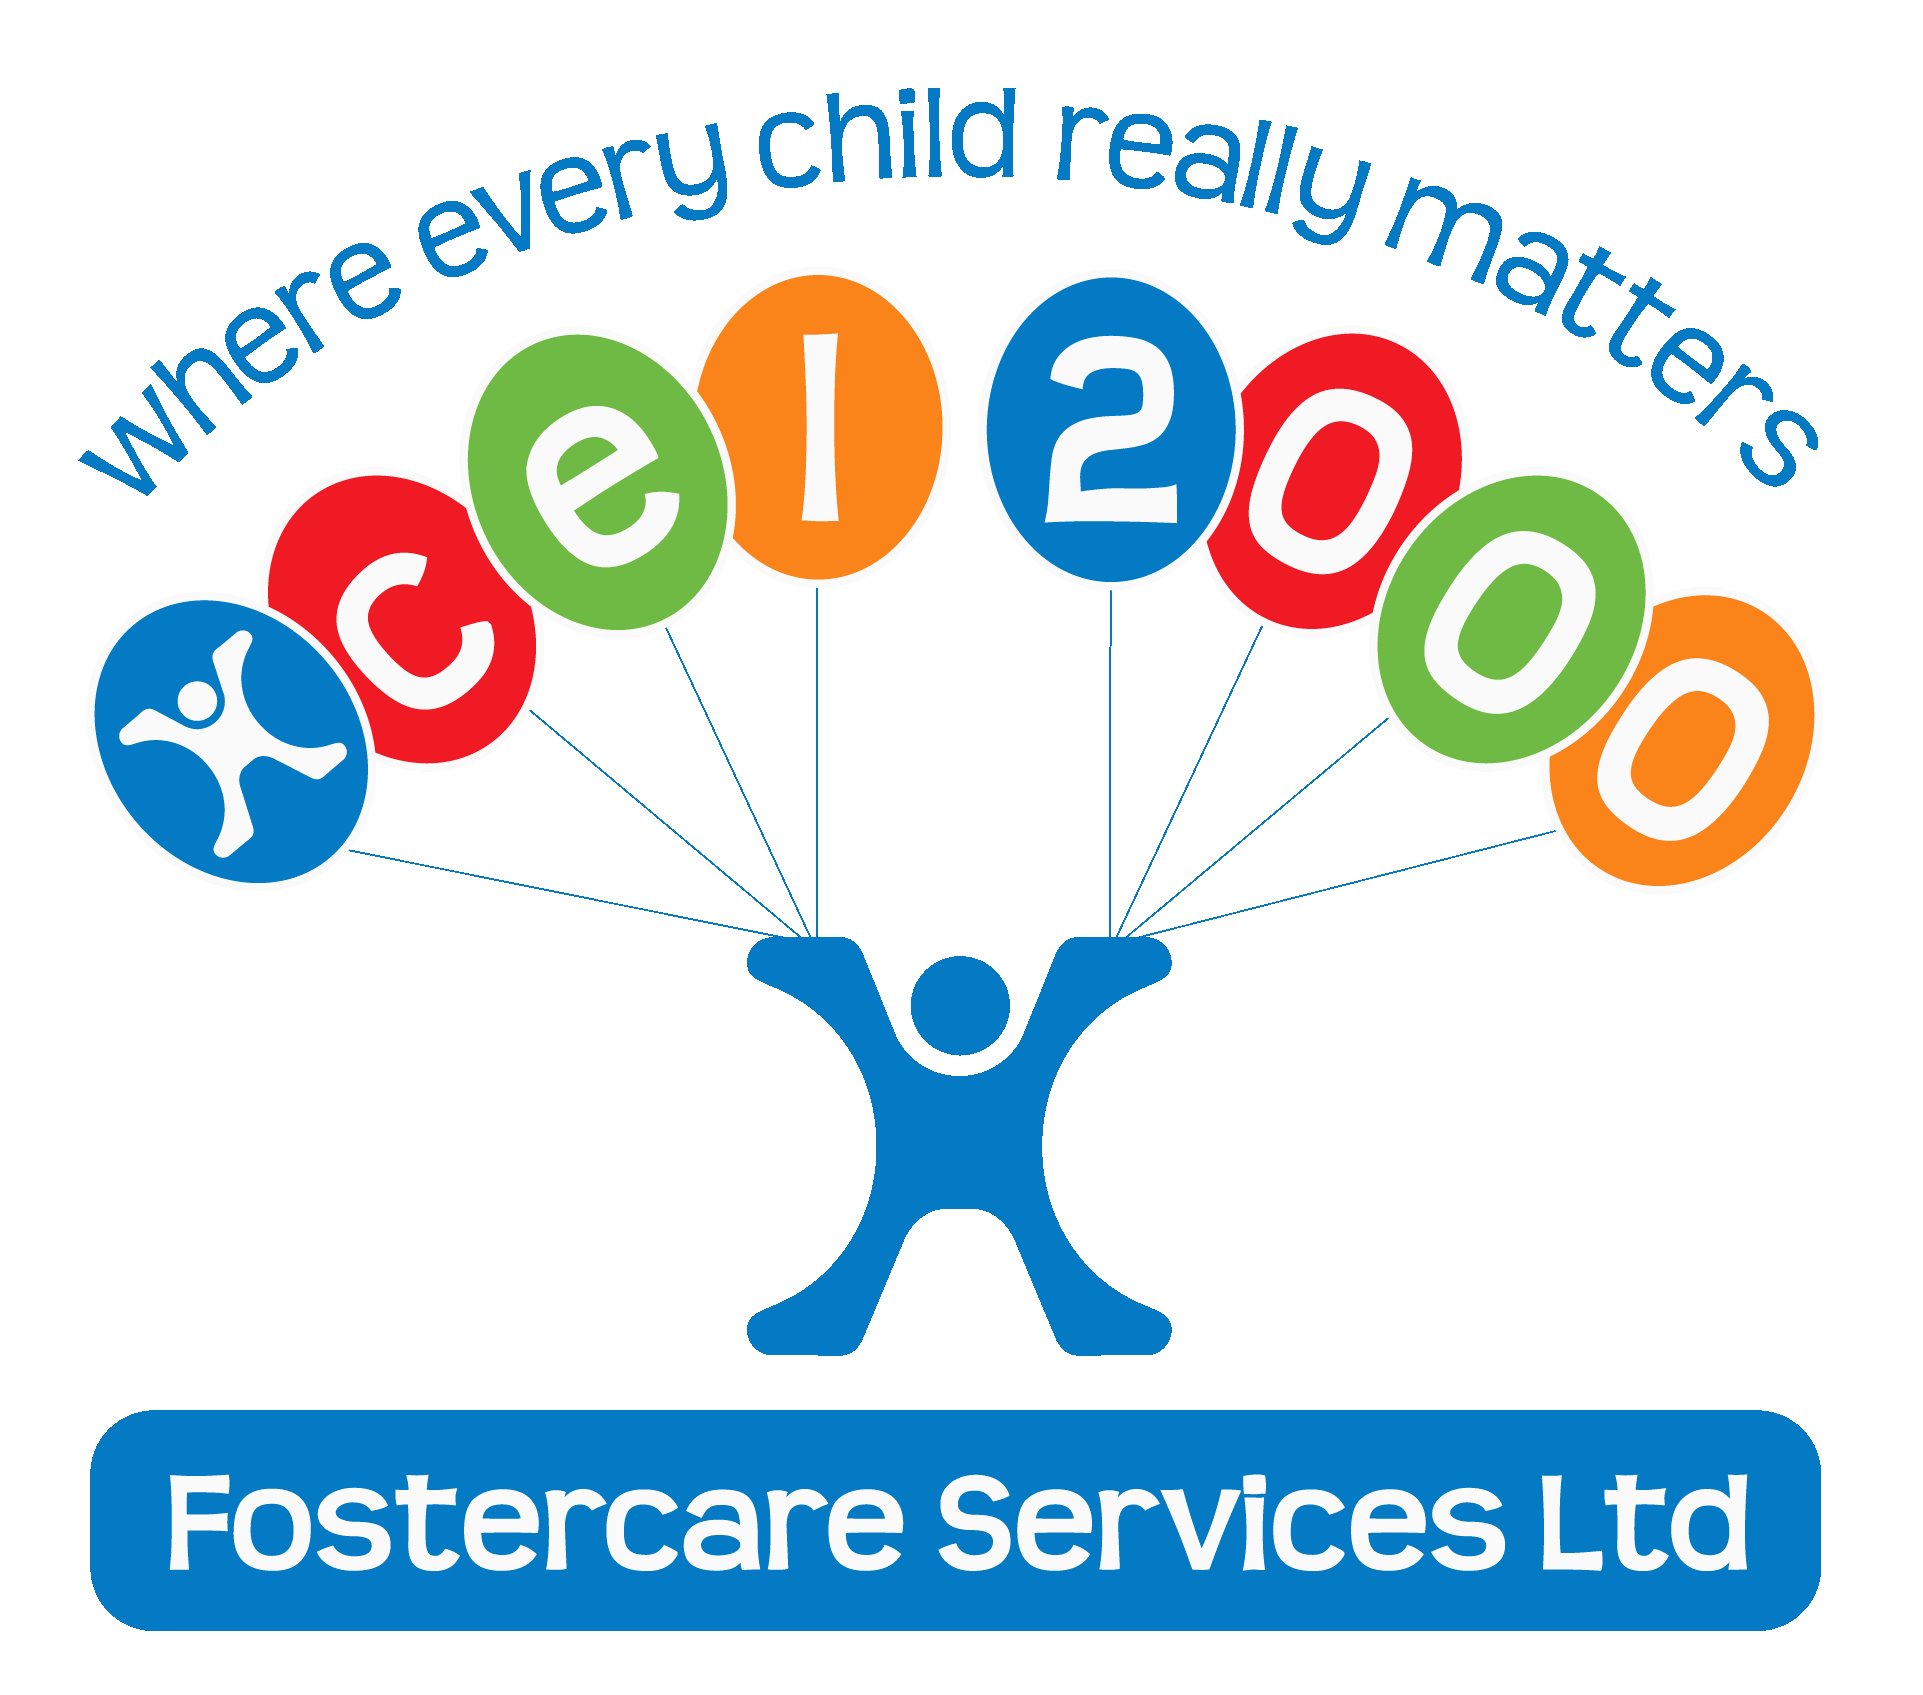 Xcel 2000 Fostercare Ltd